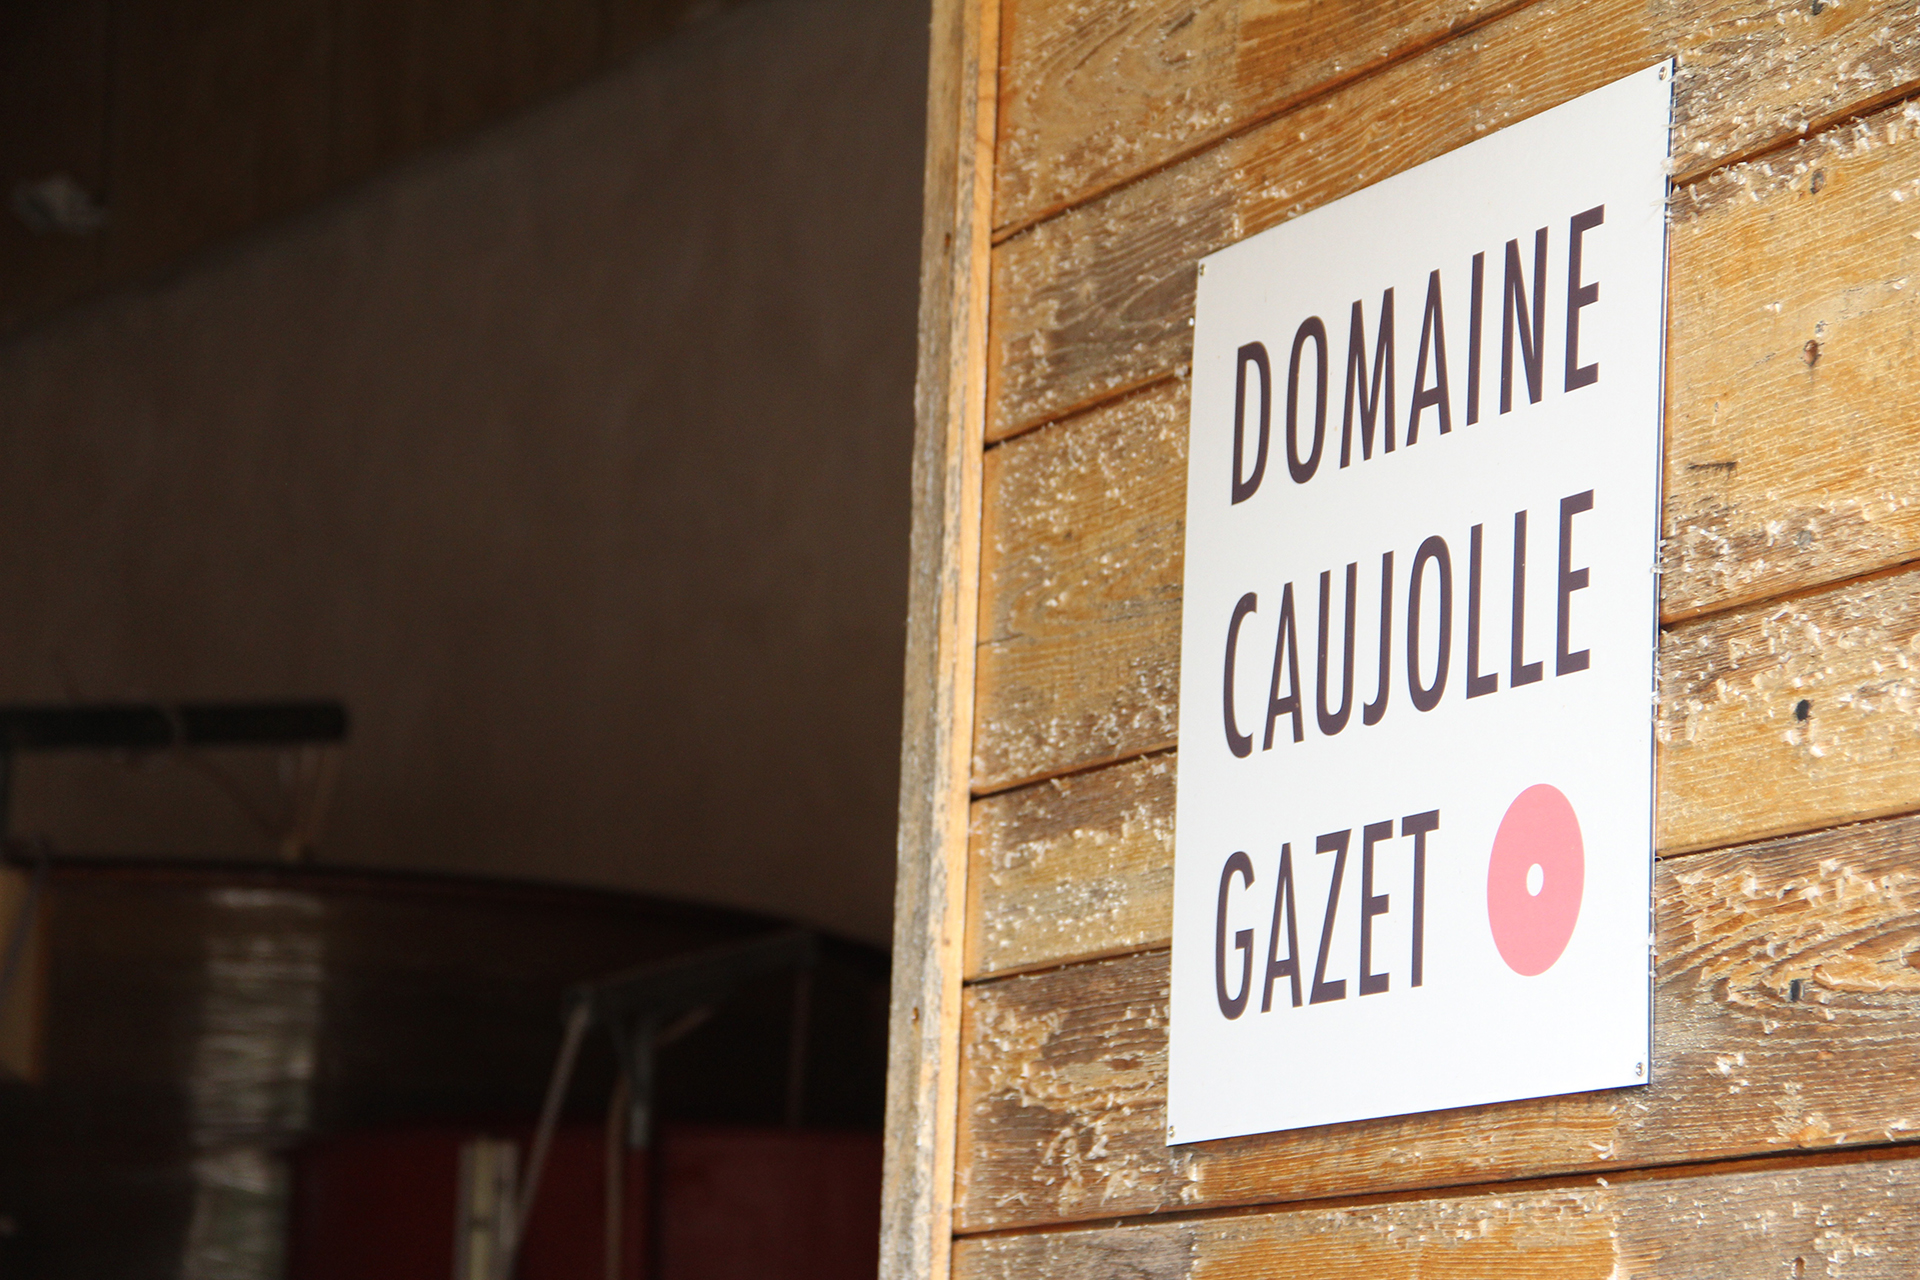 Domaine Caujolle Gazet